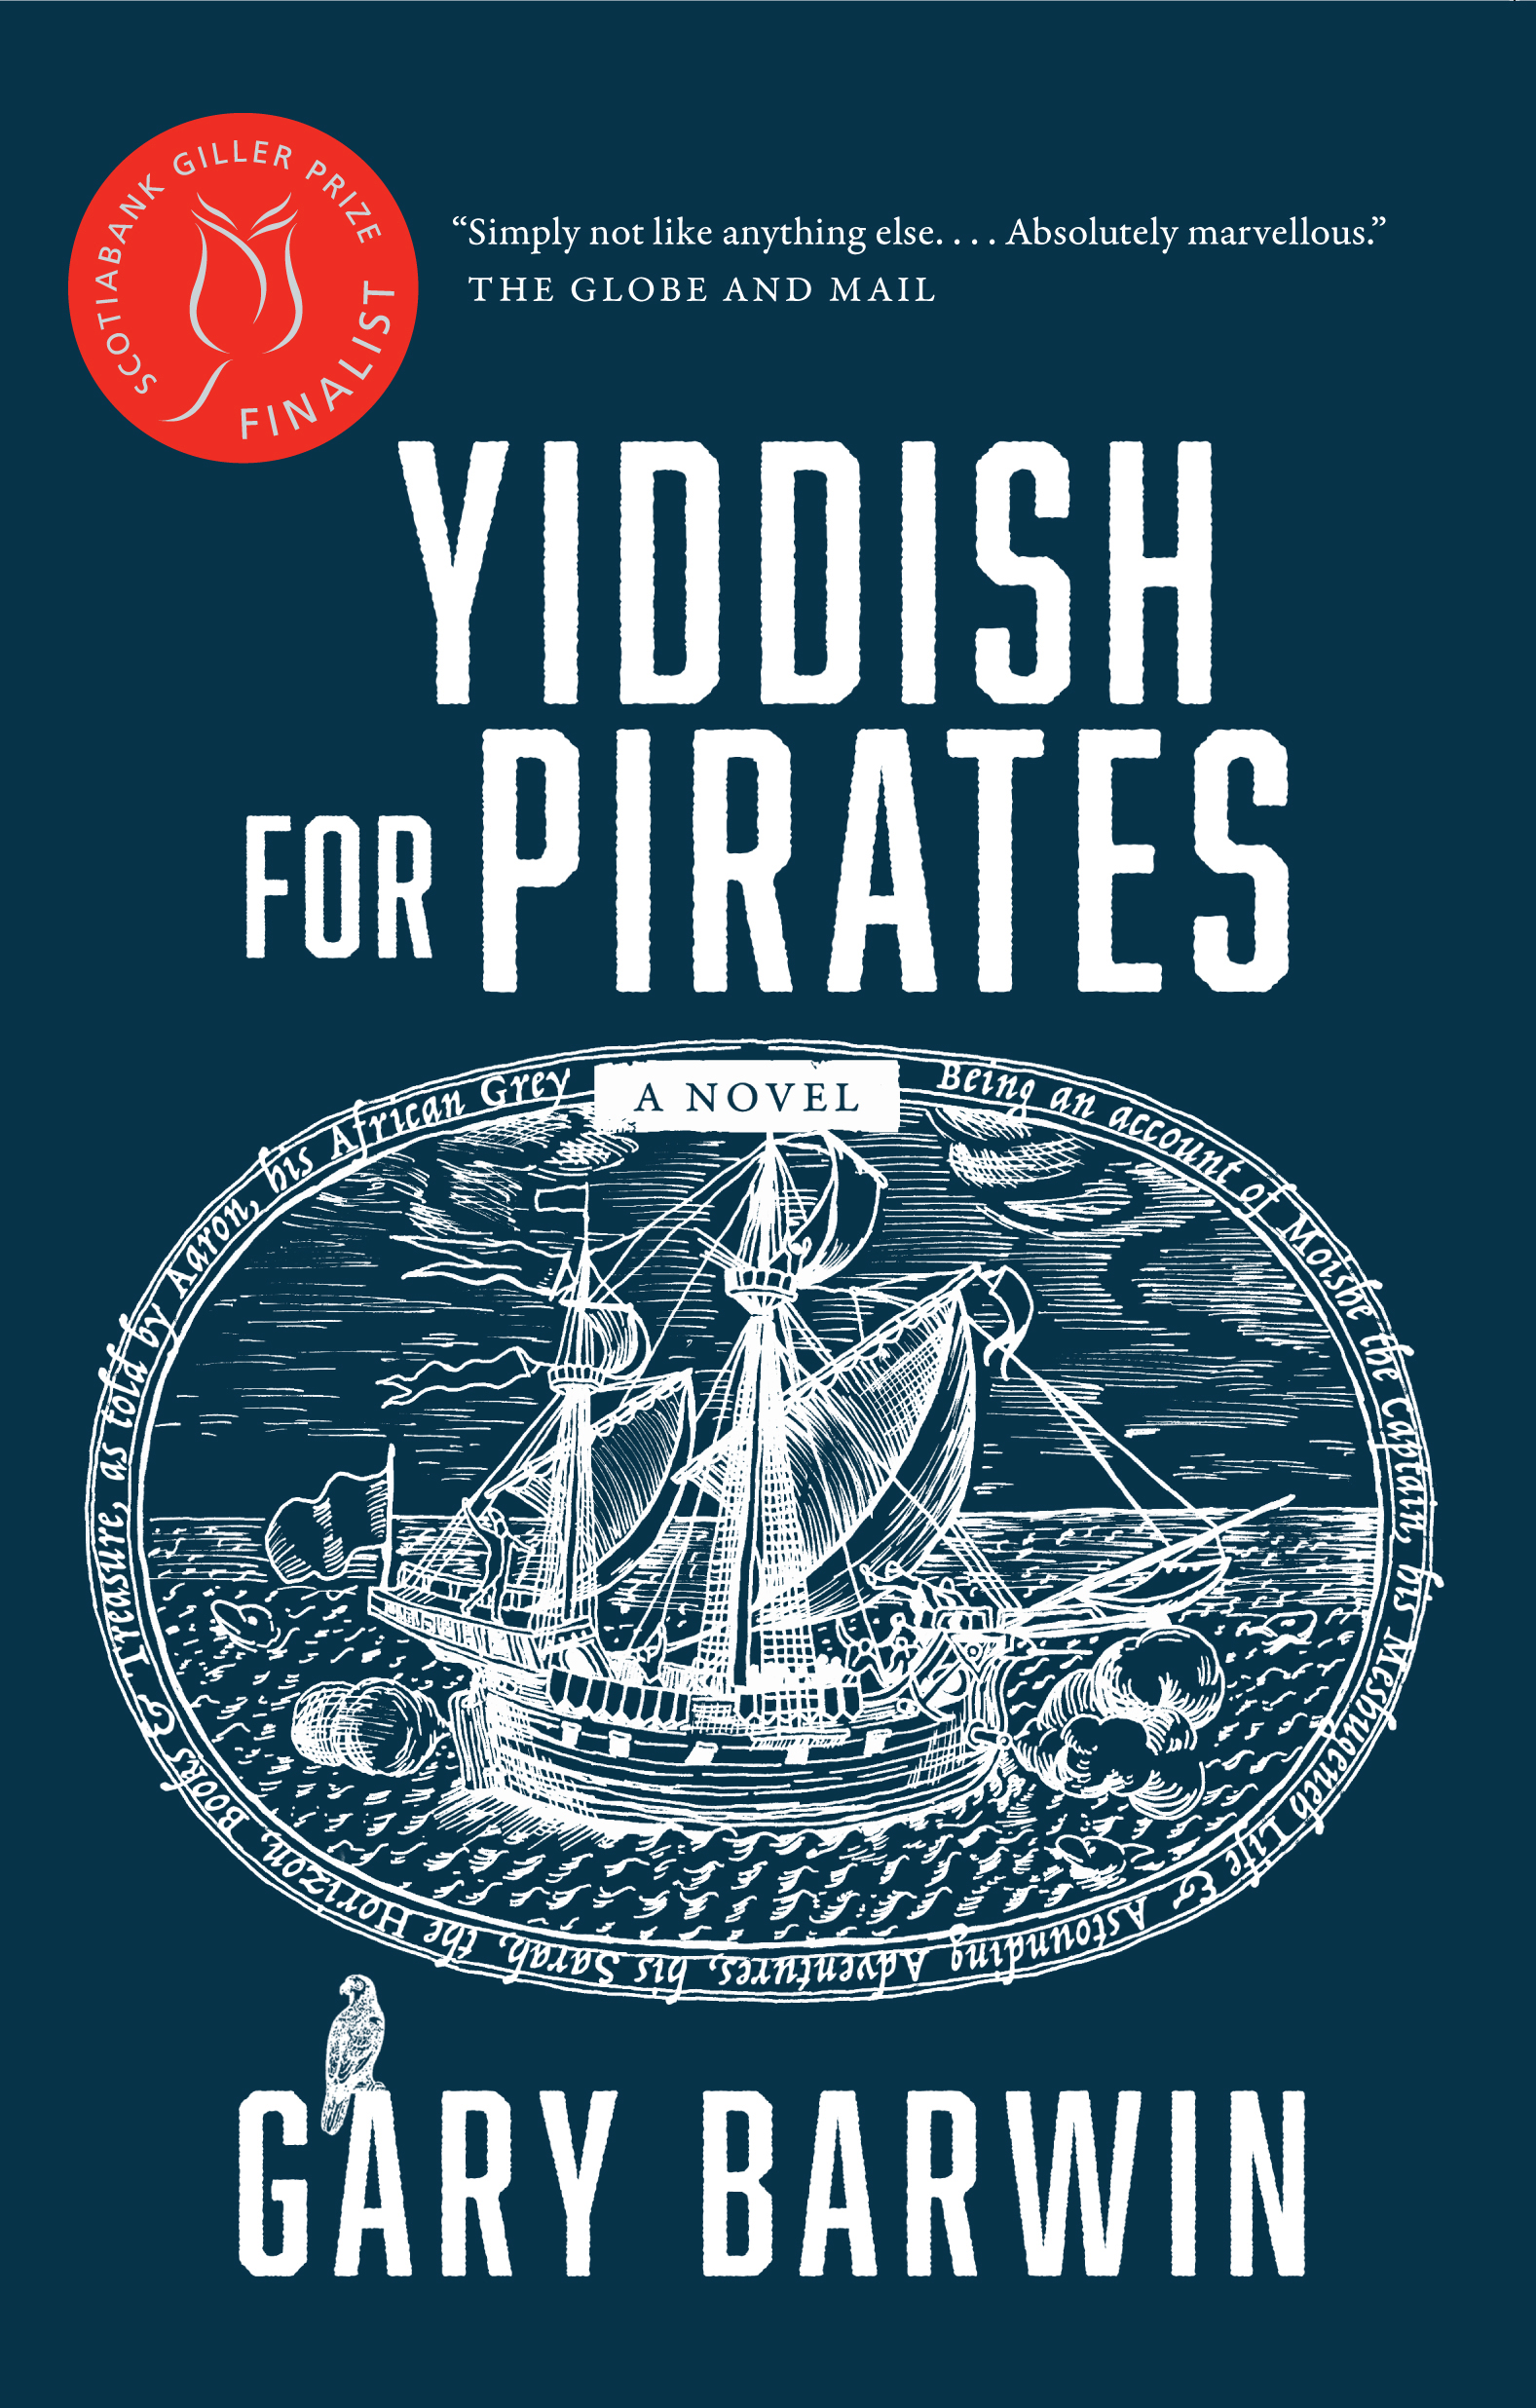 yiddish-for-pirates-paperback